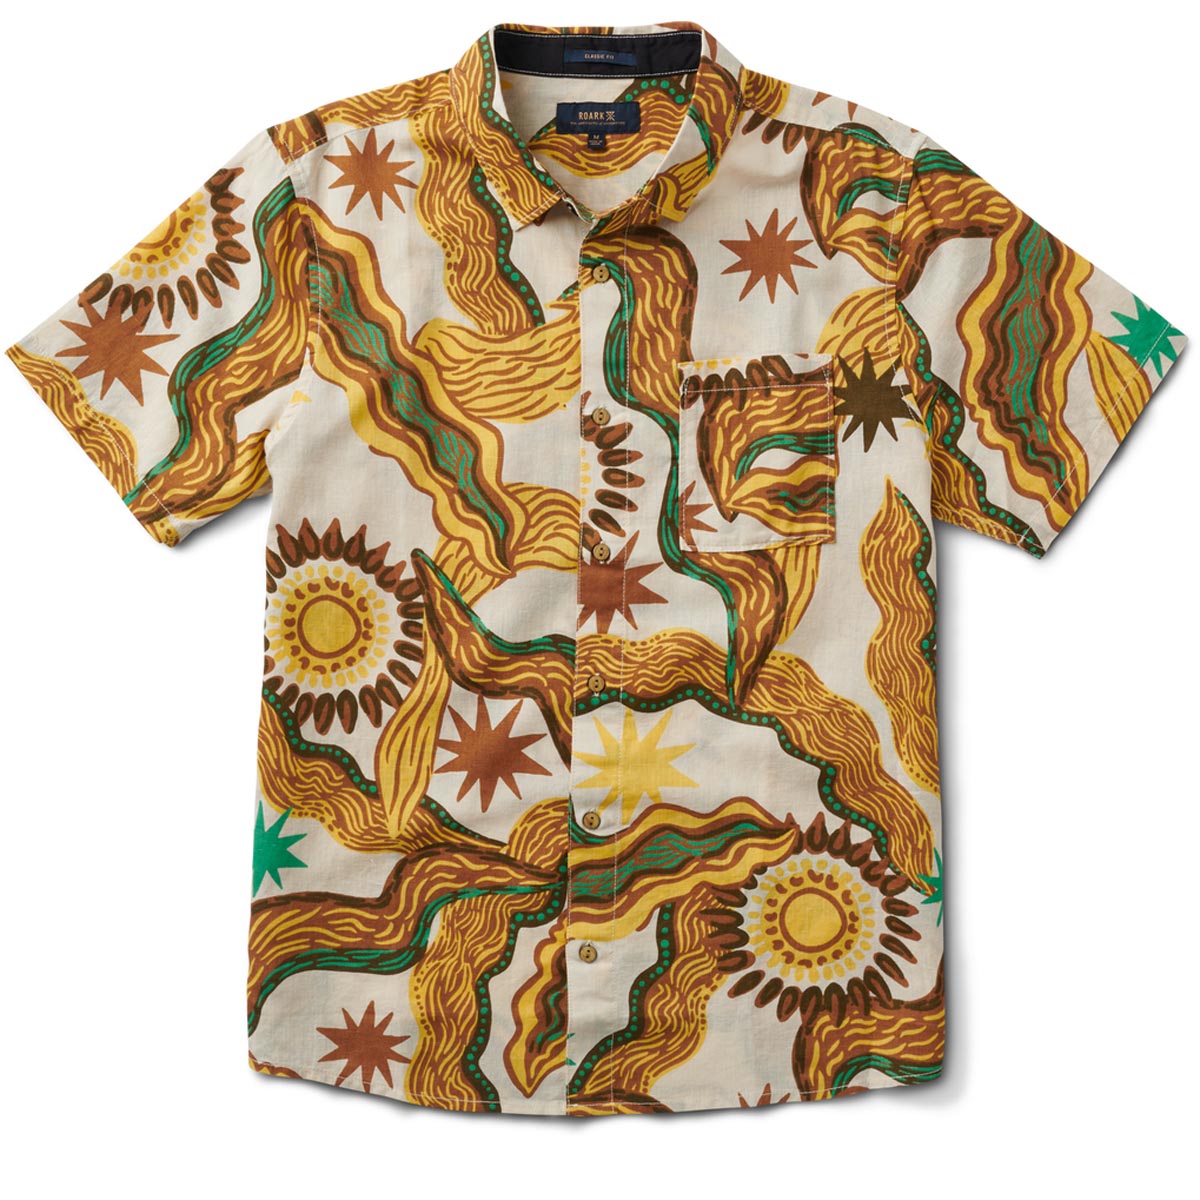 Roark Journey Woven Shirt - Grotta Magica Almond image 1